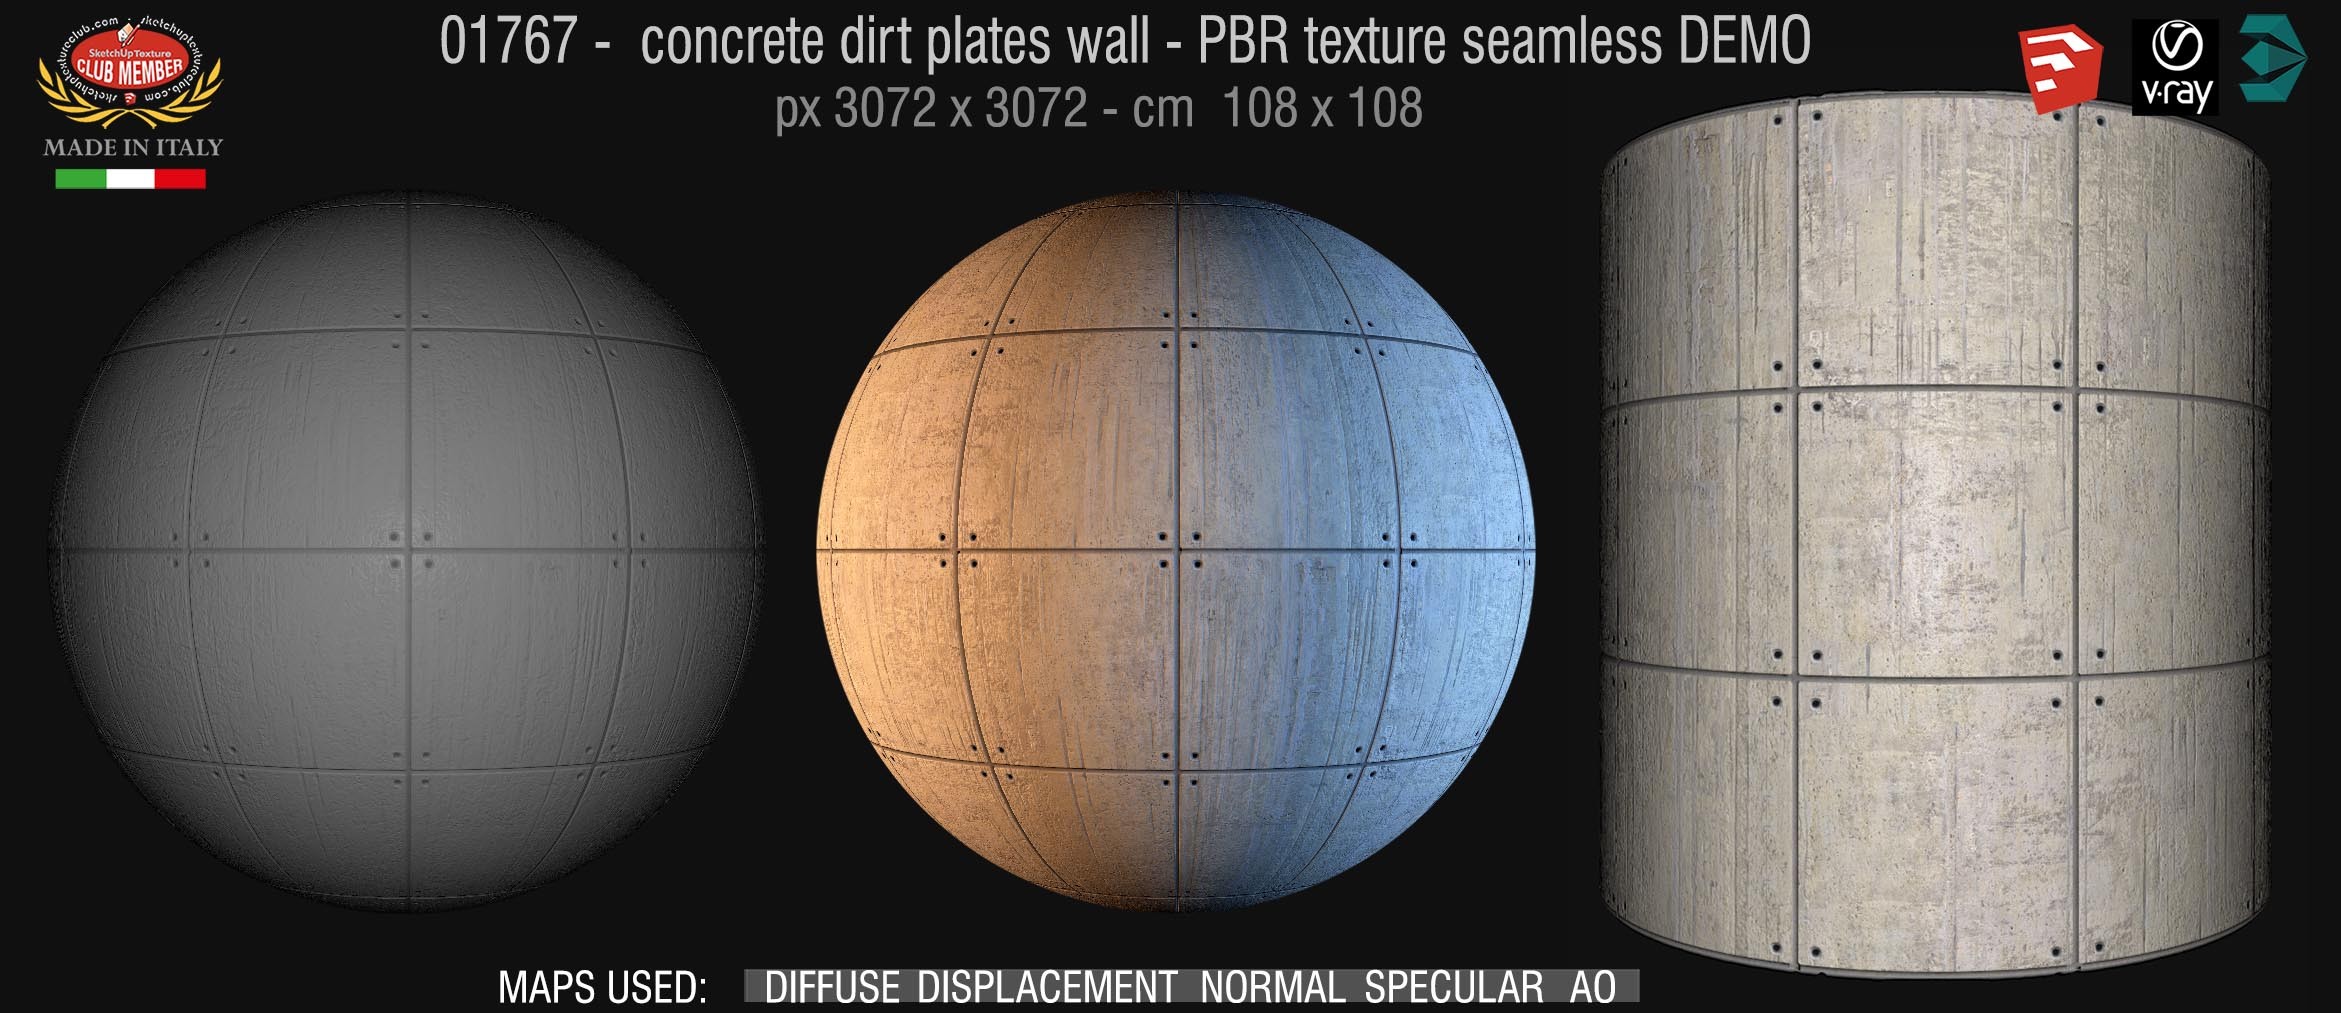 01767 concrete dirt plates wall PBR texture seamless DEMO